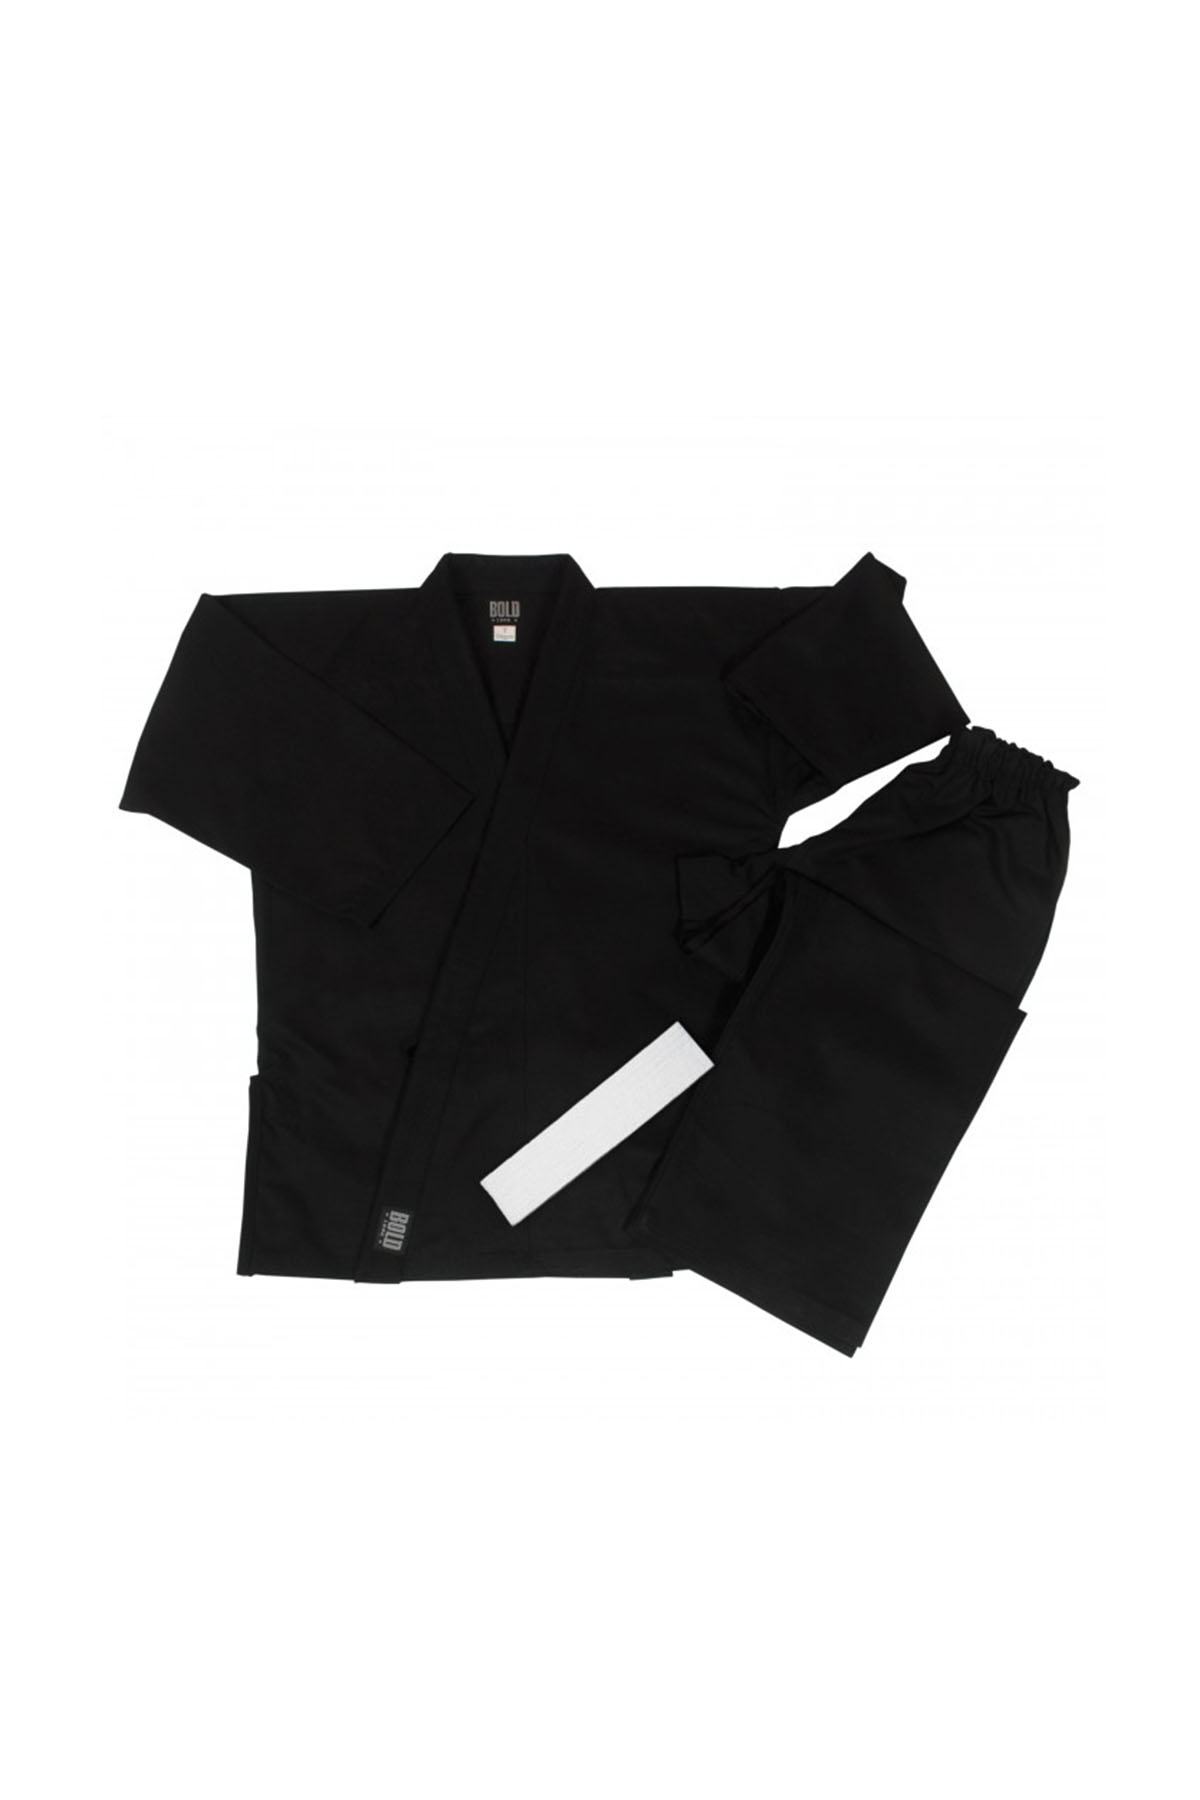 Uniform – 6oz Lightweight Traditional Set – Texas Tang Soo Do